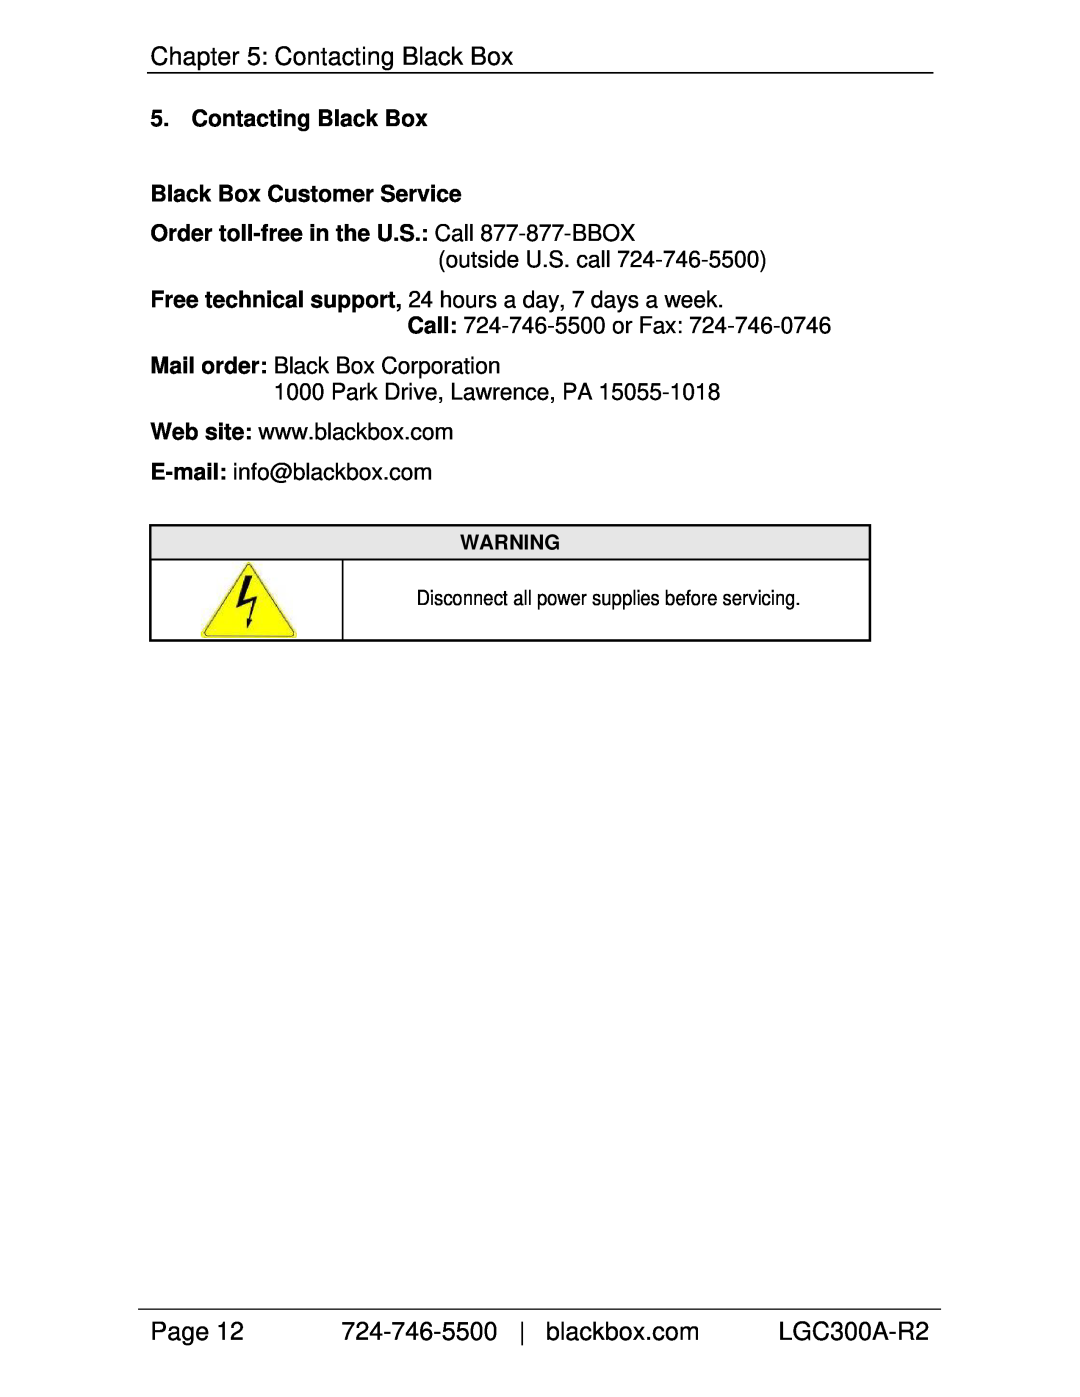 Black Box LGC300A-R2 Contacting Black Box Black Box Customer Service, Order toll-free in the U.S. Call 877-877-BBOX 